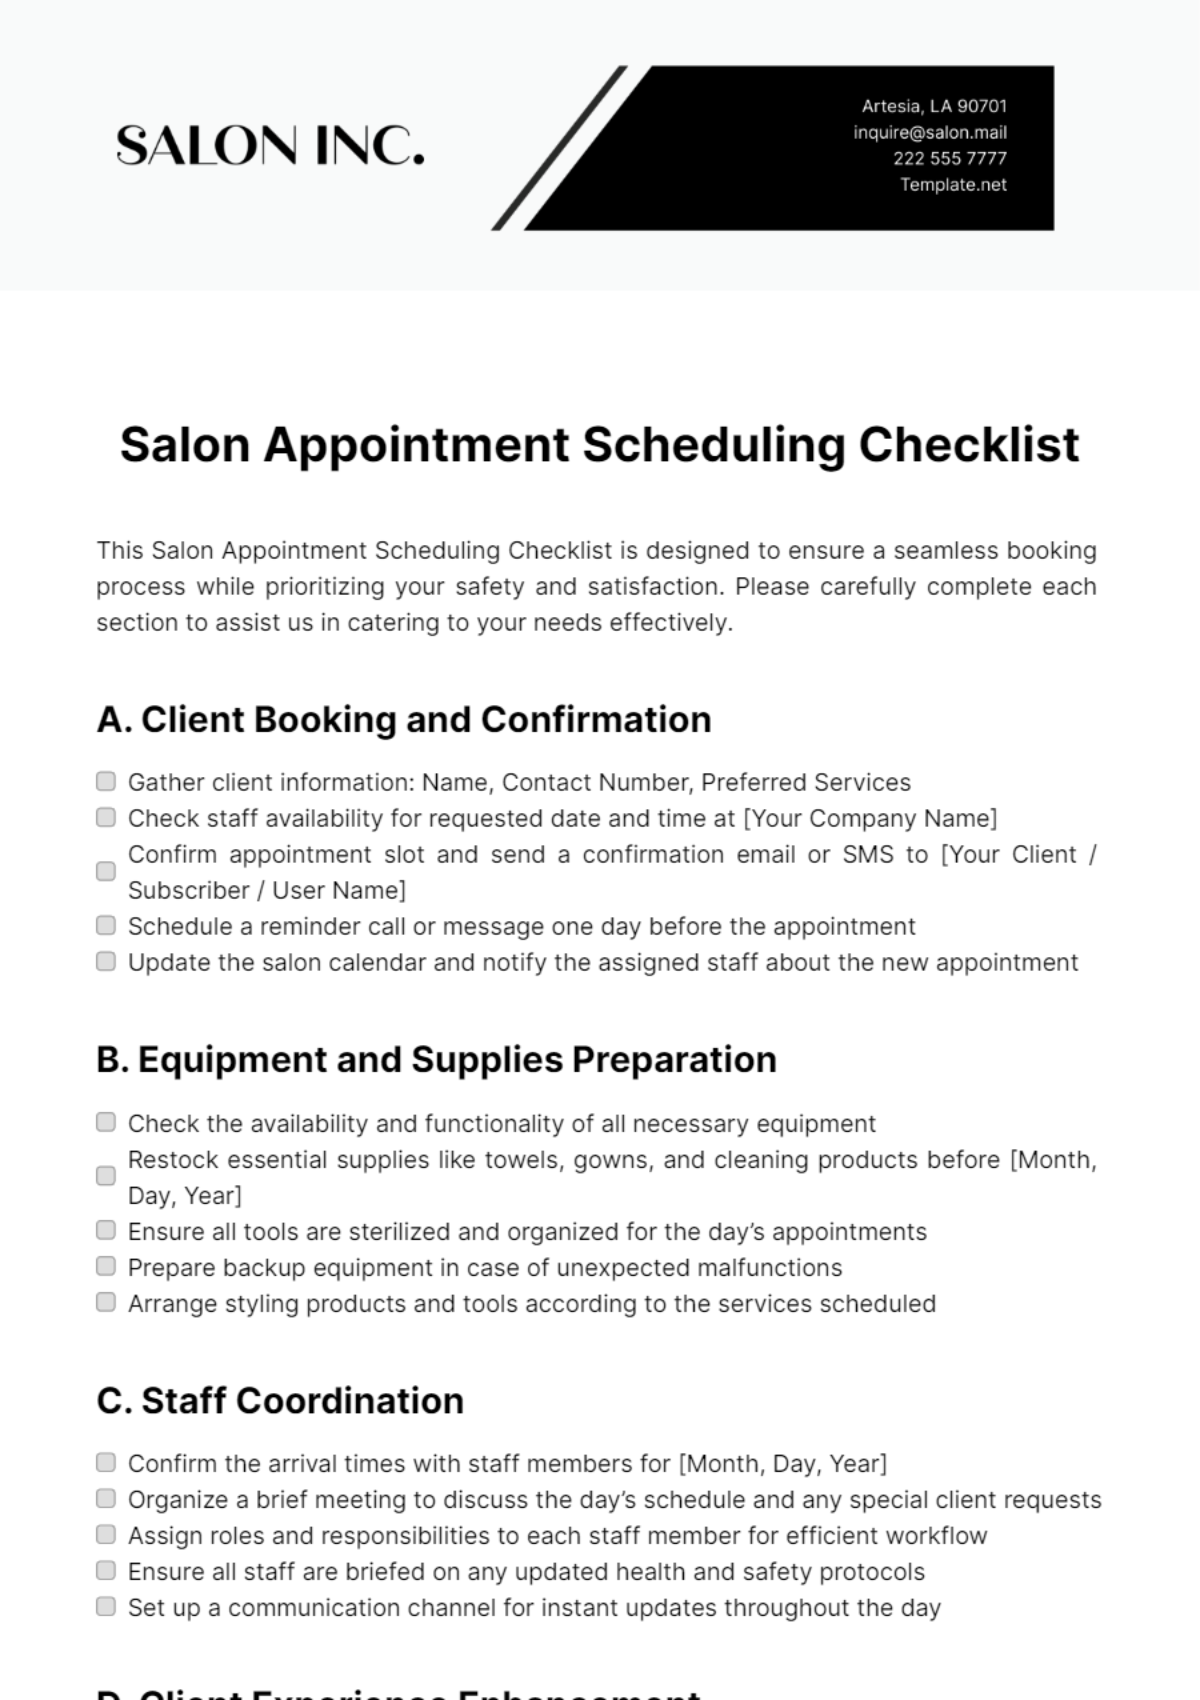 Salon Appointment Scheduling Checklist Template